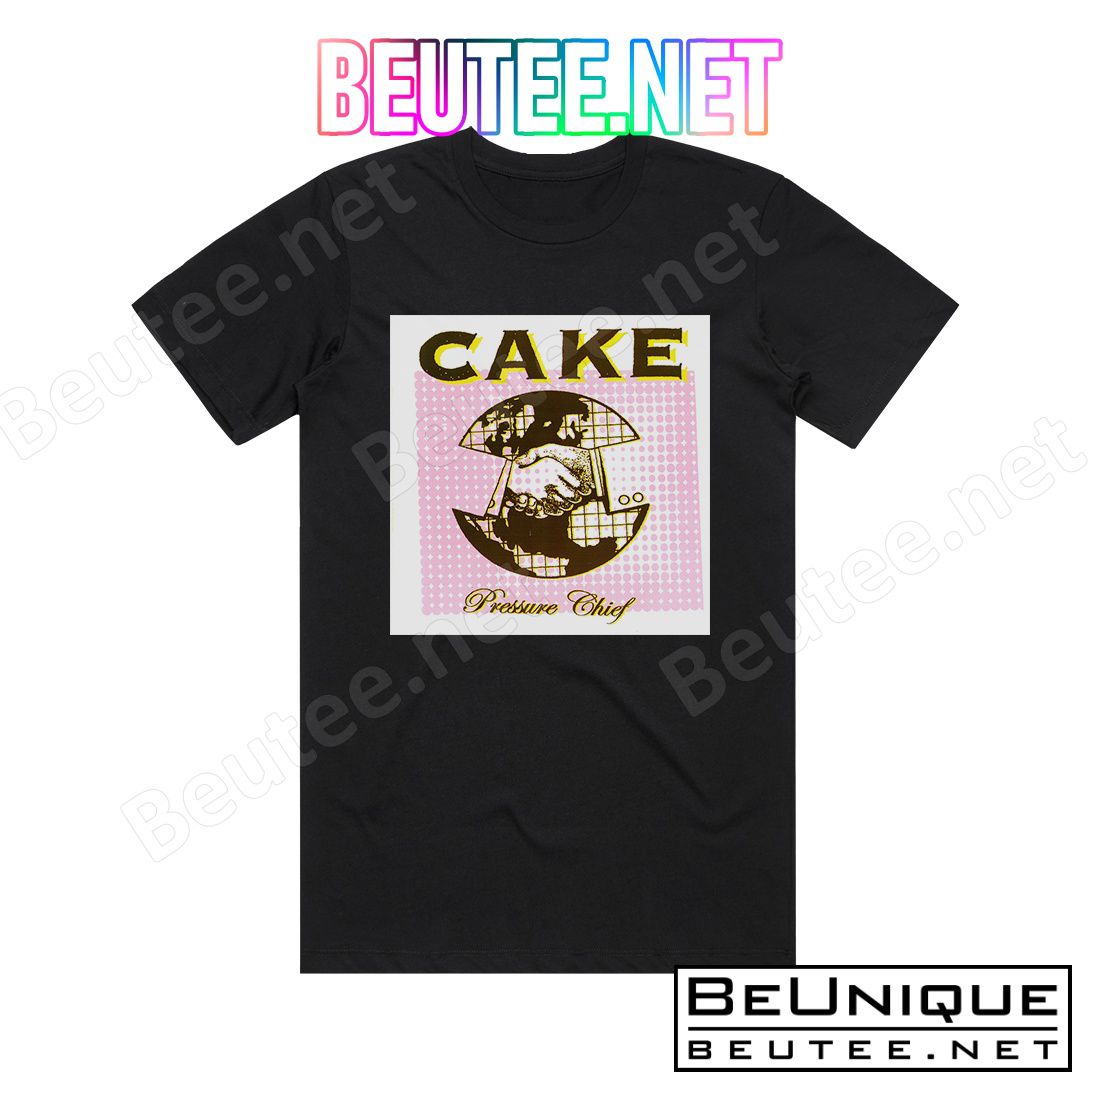 Cake Pressure Chief 1 Album Cover T-Shirt